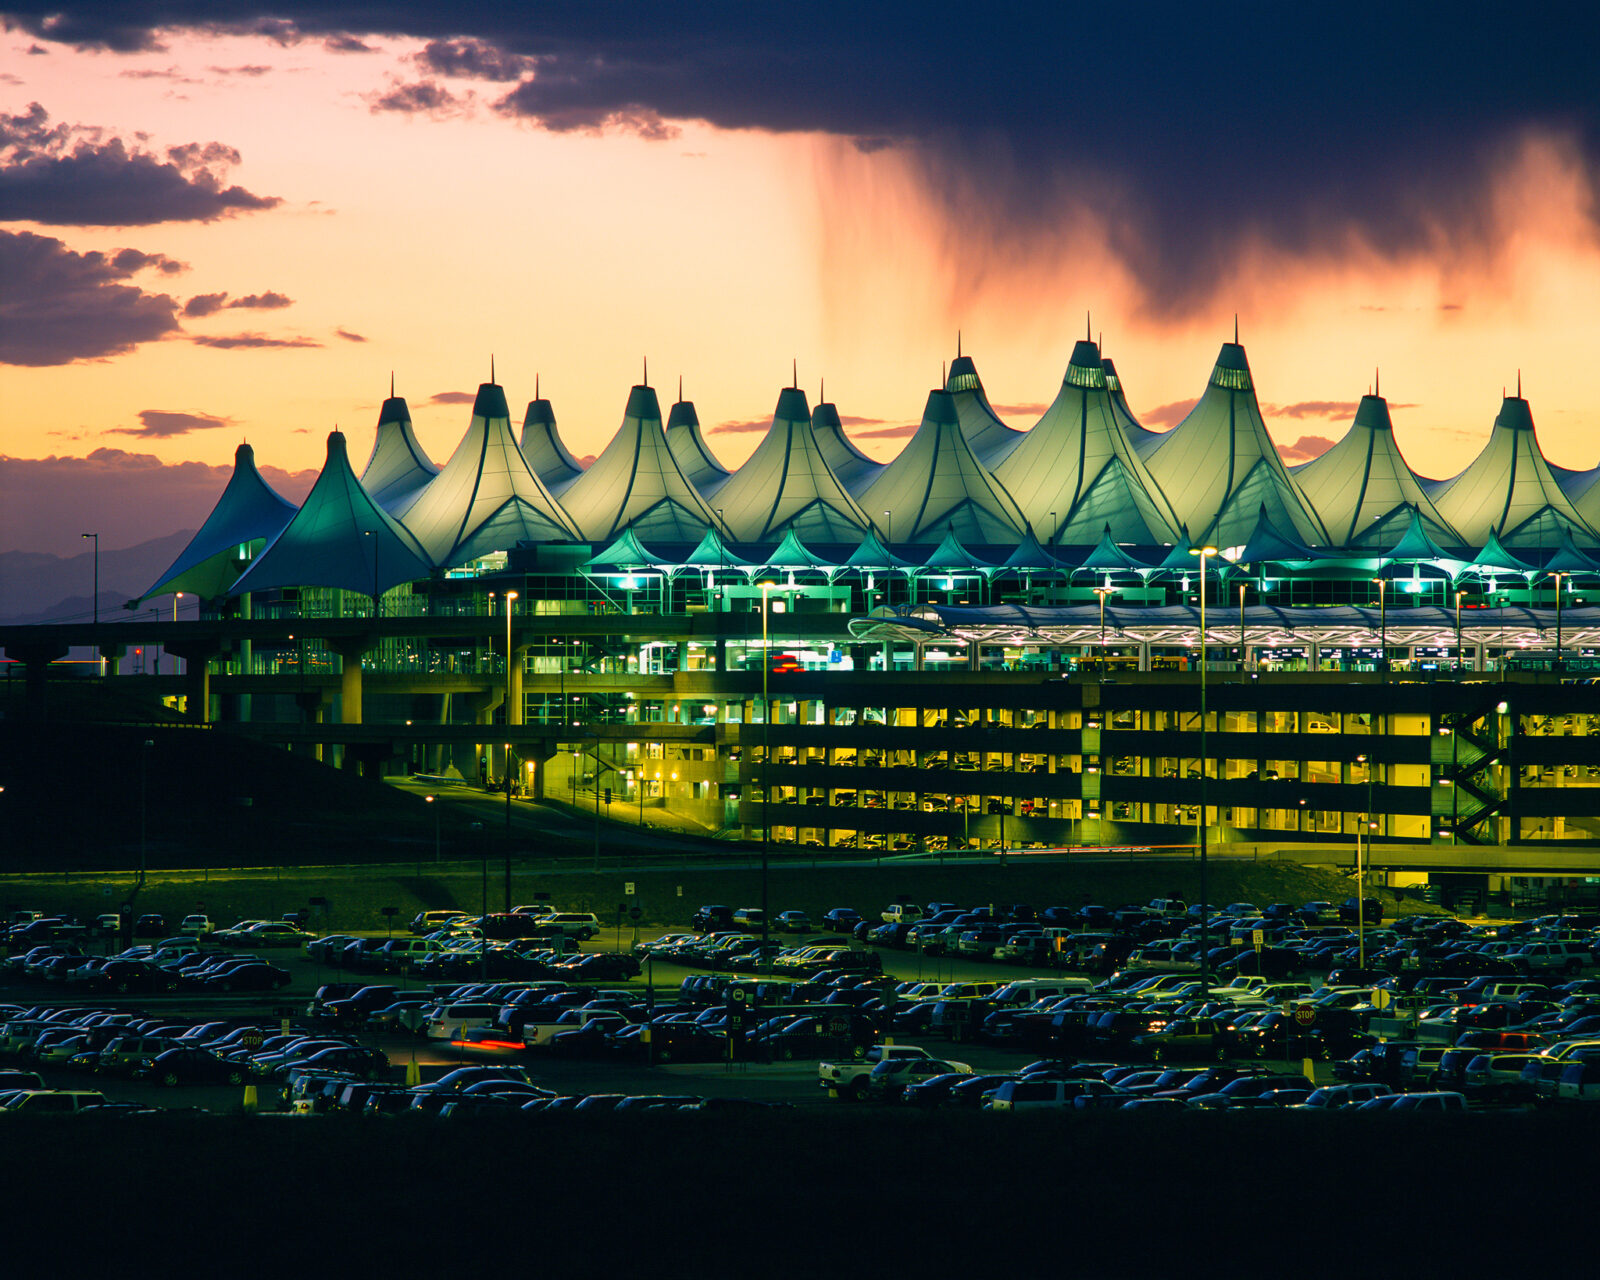 Denver International Airport's terminal and parking lot lit up at dusk